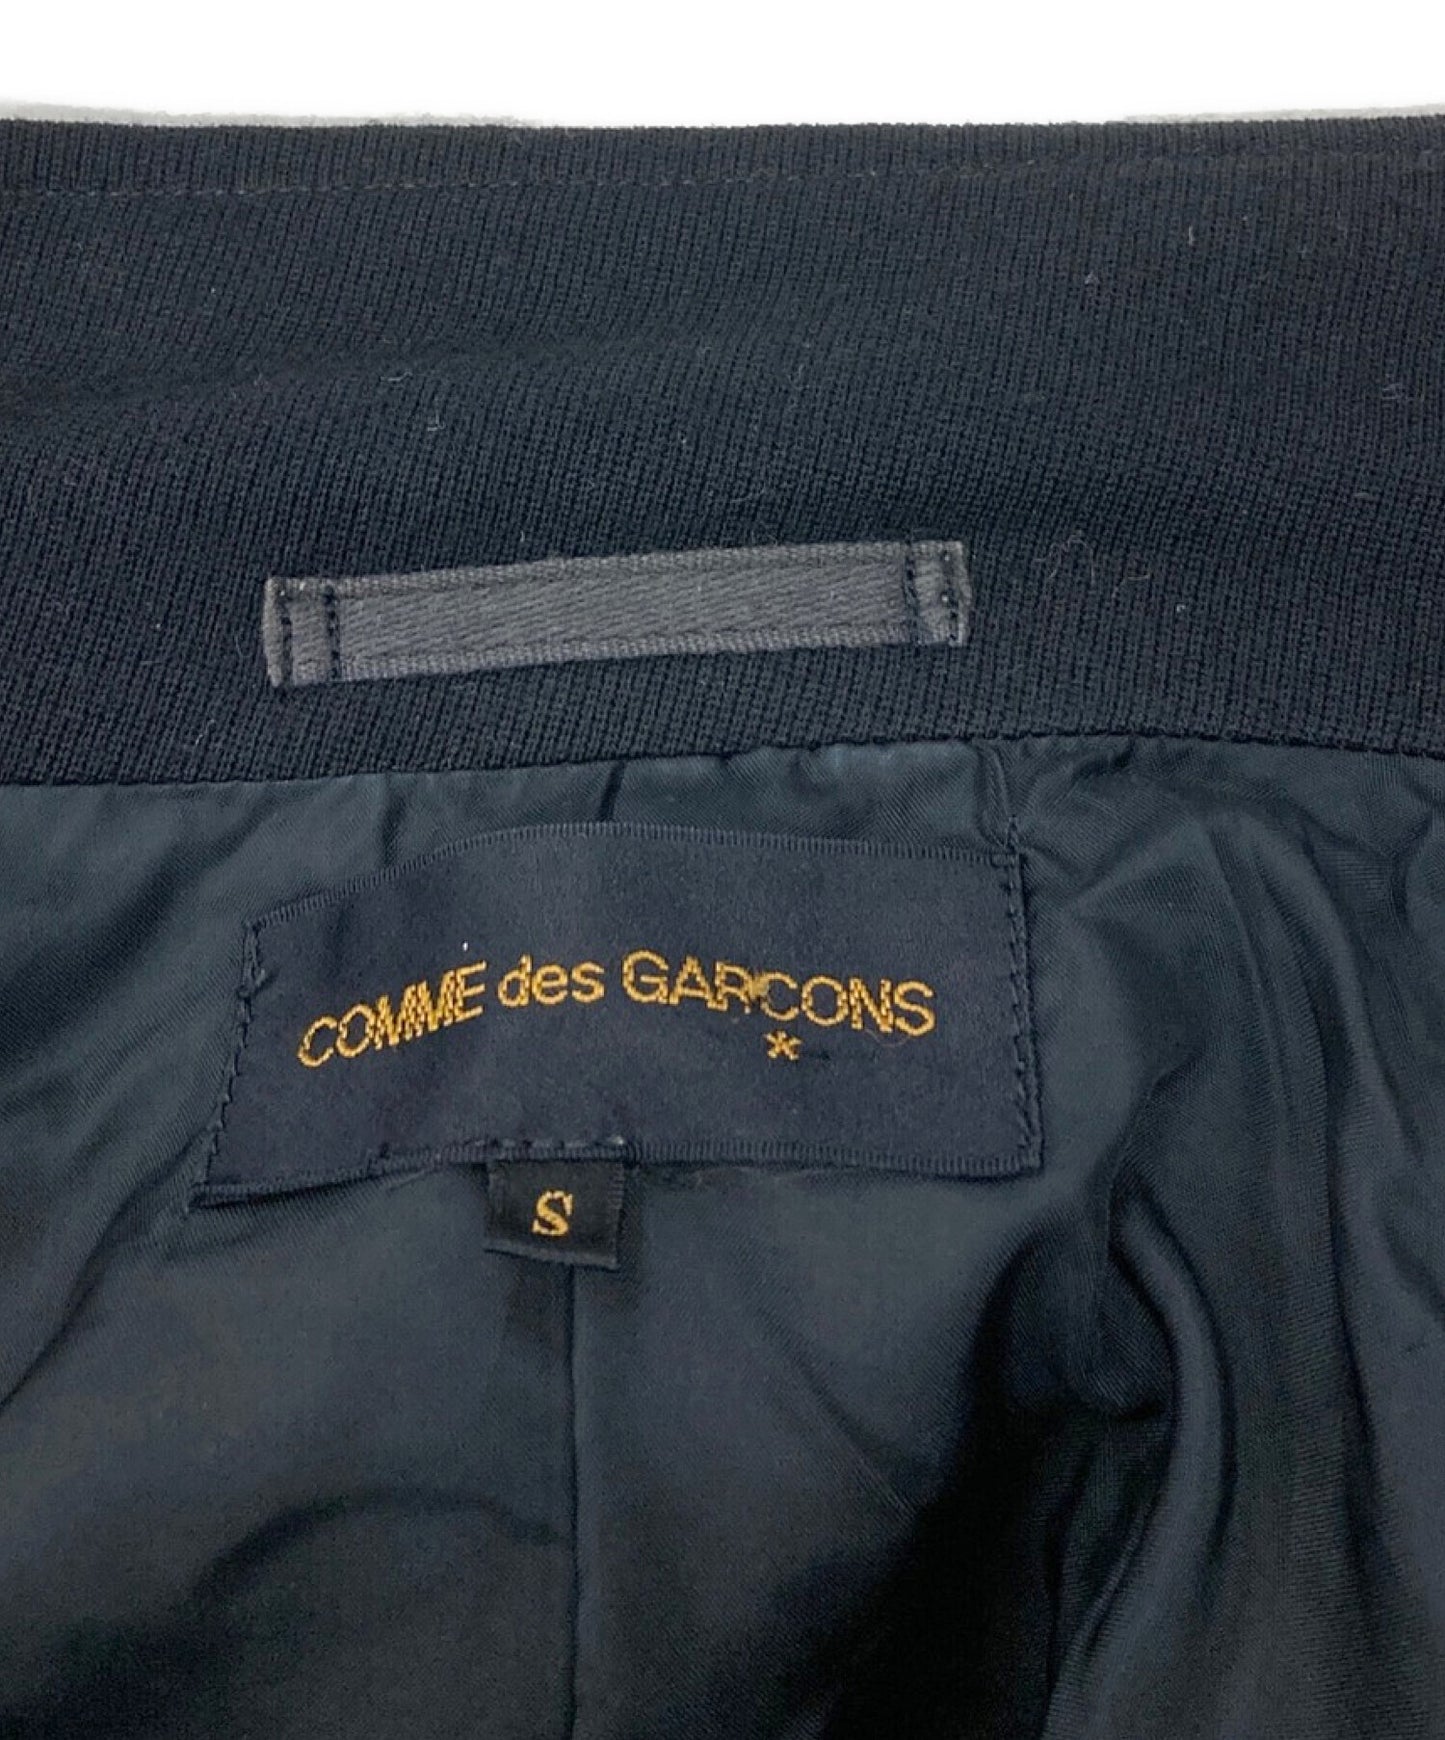 COMME DES GARCONS 89AW檔案擴展塢設計夾克GJ-05001S